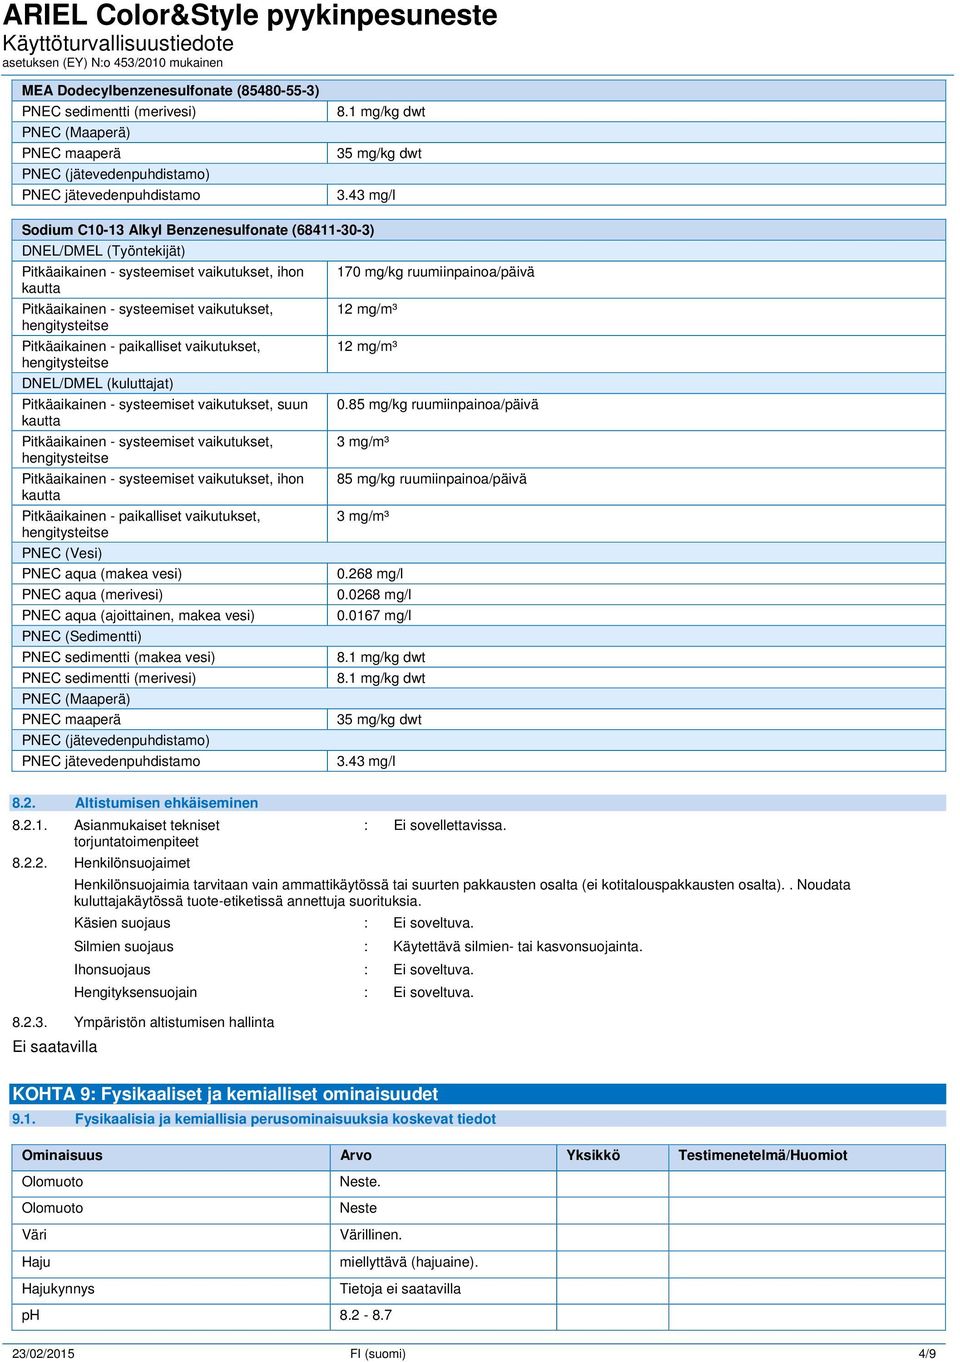 12 mg/m³ DNEL/DMEL (kuluttajat) Pitkäaikainen - systeemiset vaikutukset, suun Pitkäaikainen - systeemiset vaikutukset, Pitkäaikainen - systeemiset vaikutukset, ihon Pitkäaikainen - paikalliset